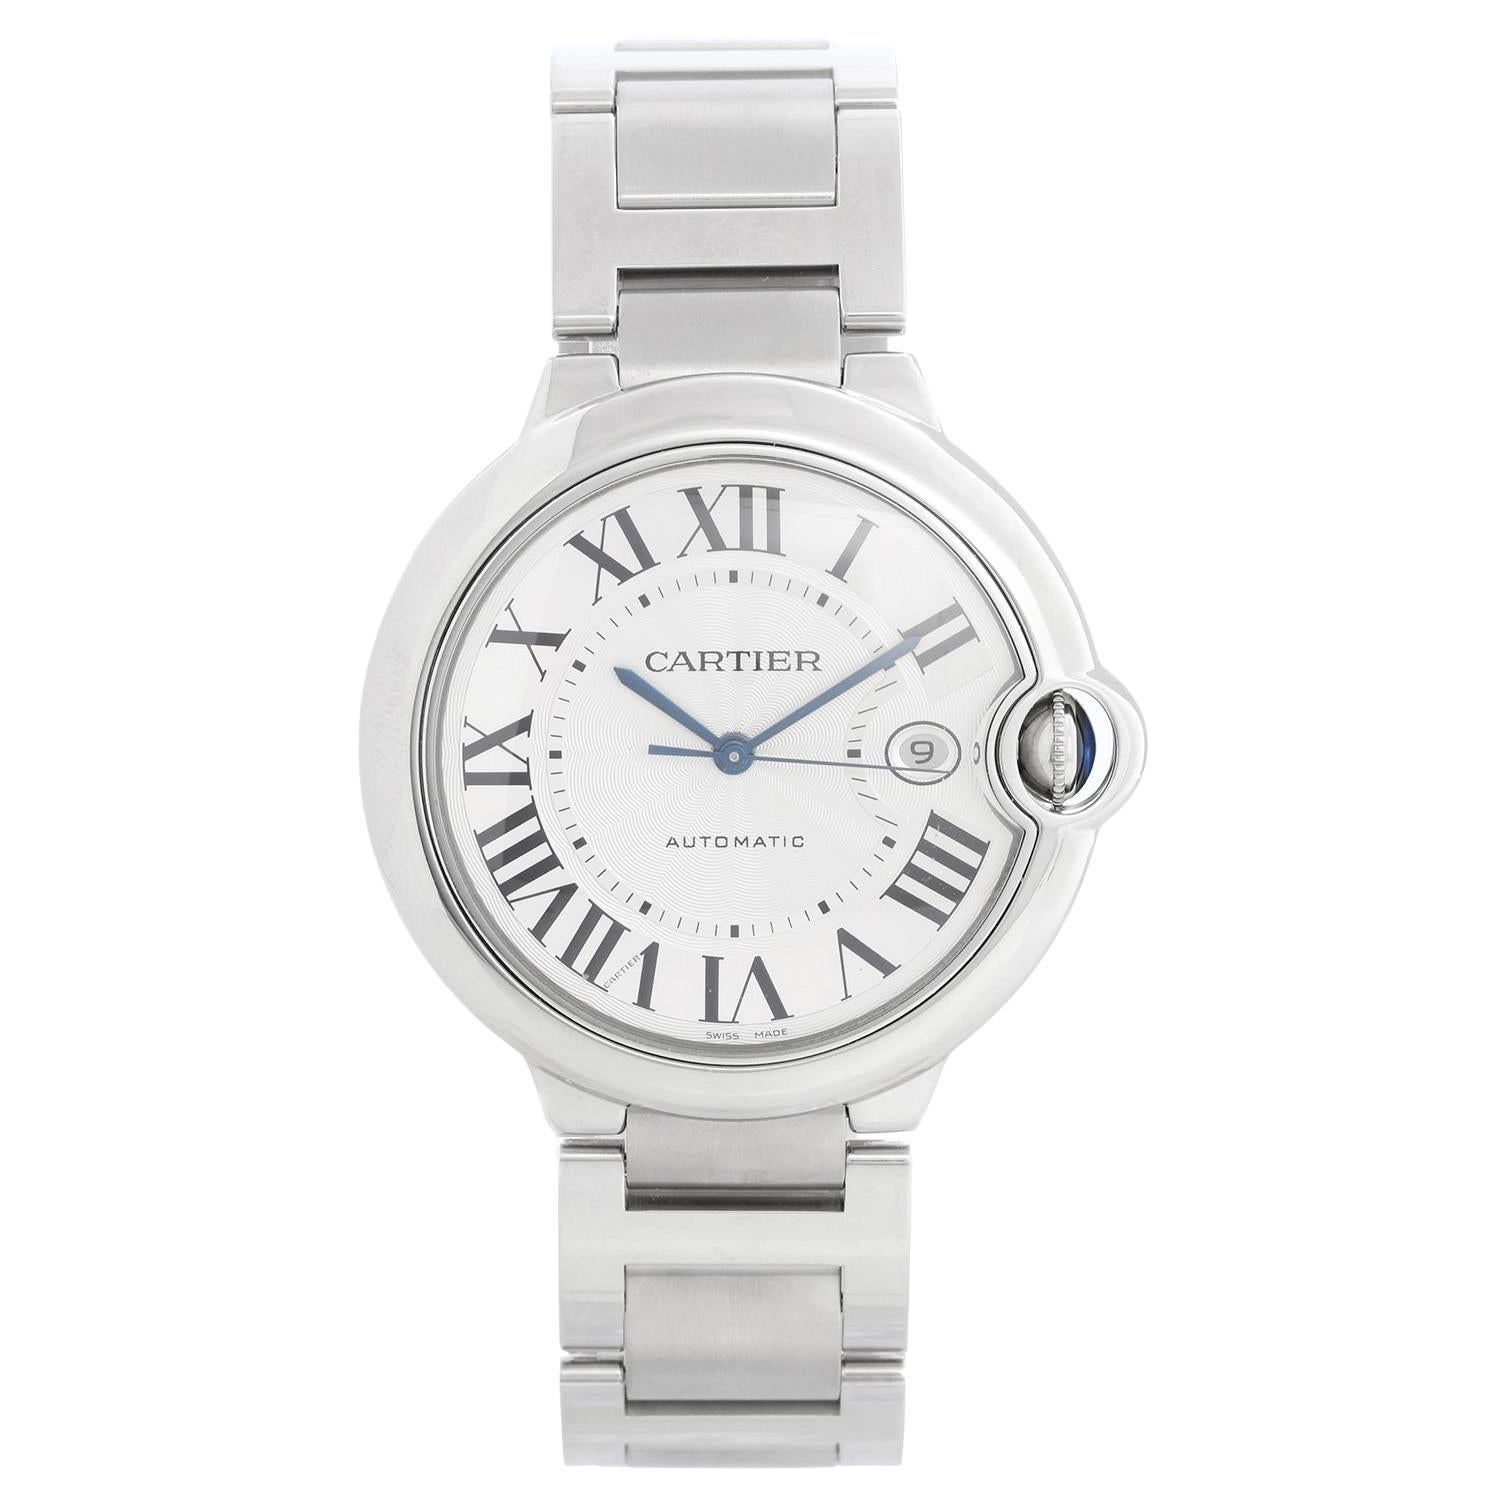 Cartier Ballon Bleu Men's Stainless Steel Automatic Watch W69012Z4 3001 For Sale